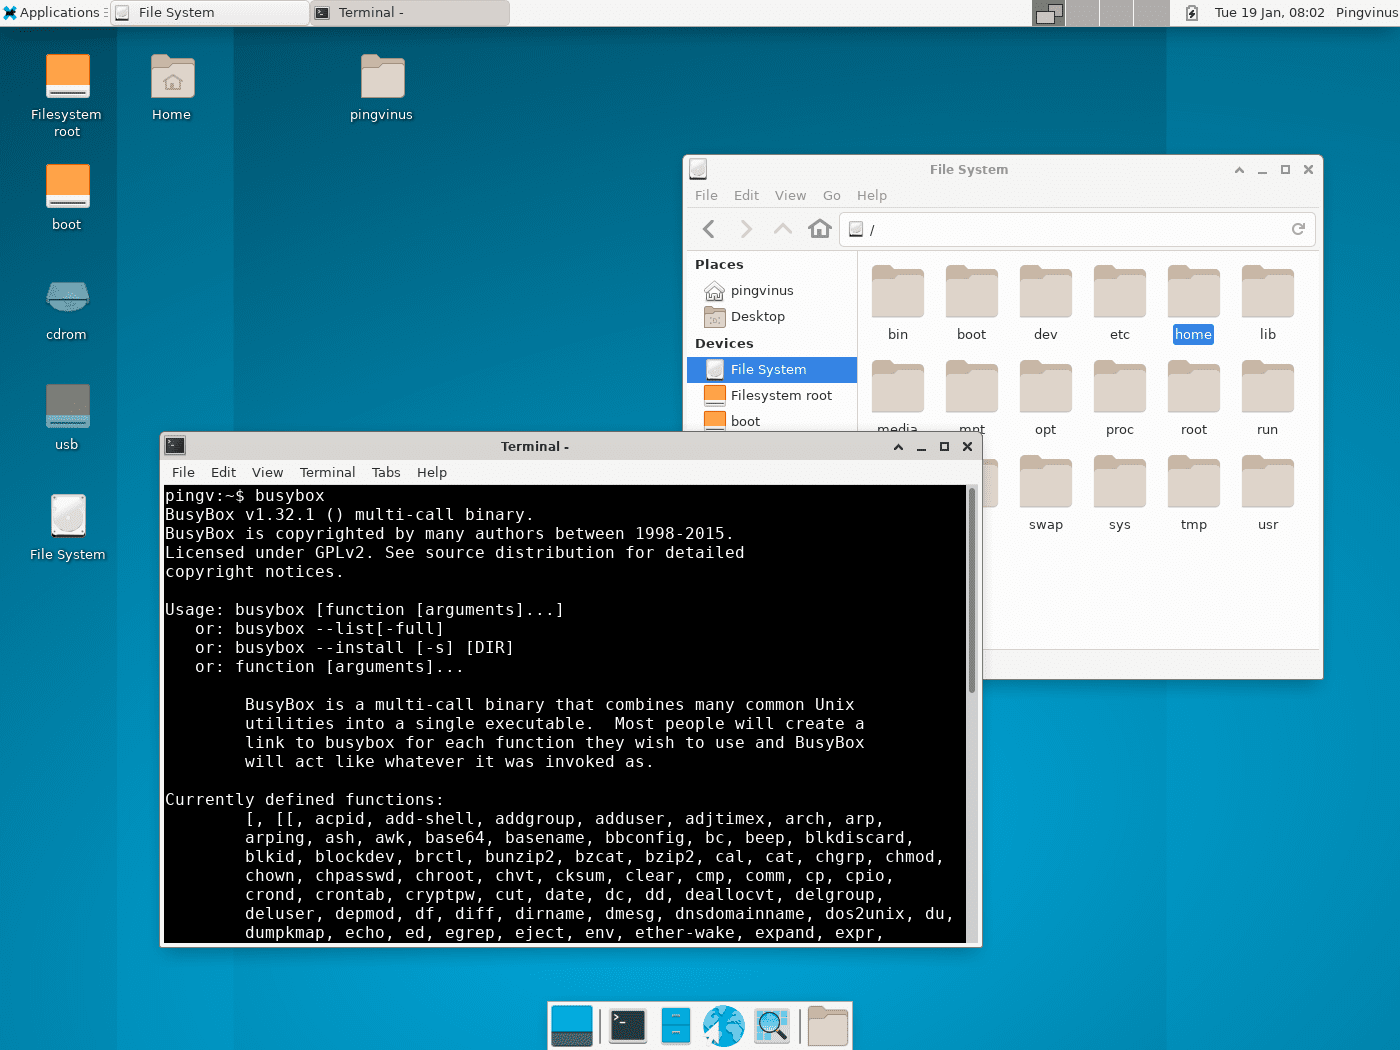 Alpine Linux 3.13